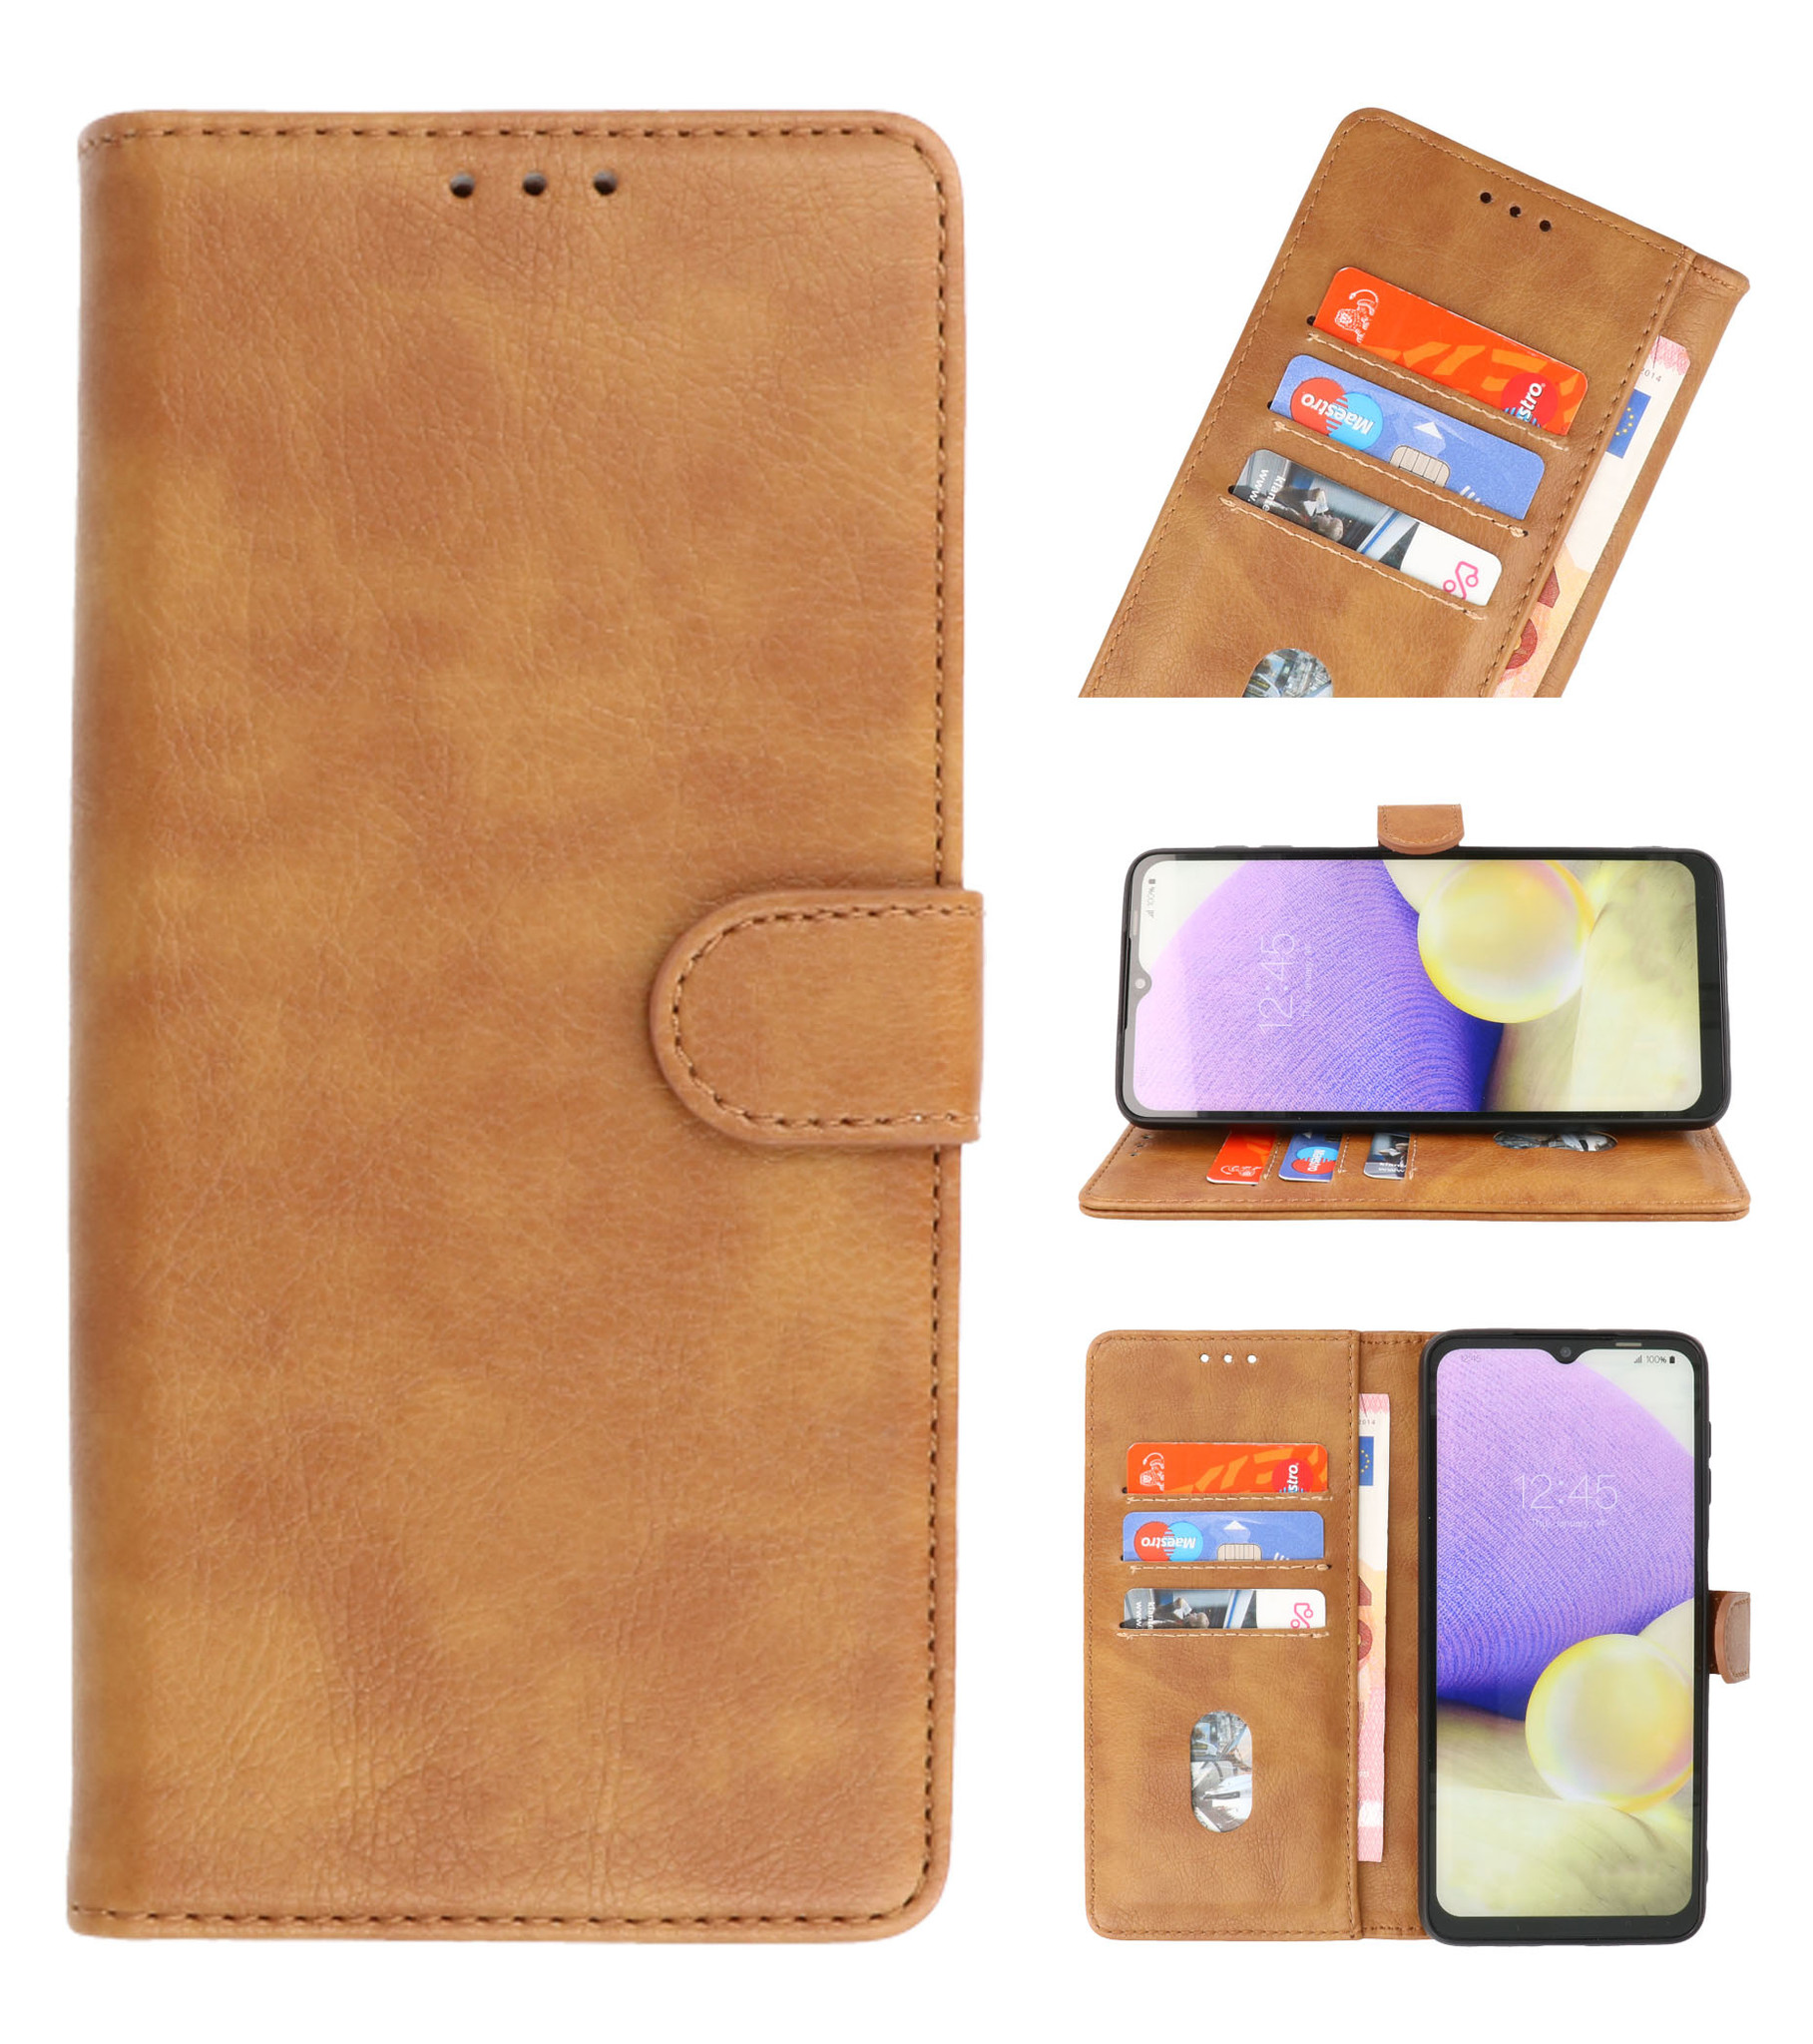 Funda Estuche Bookstyle Wallet para Samsung Galaxy A71 Marrón